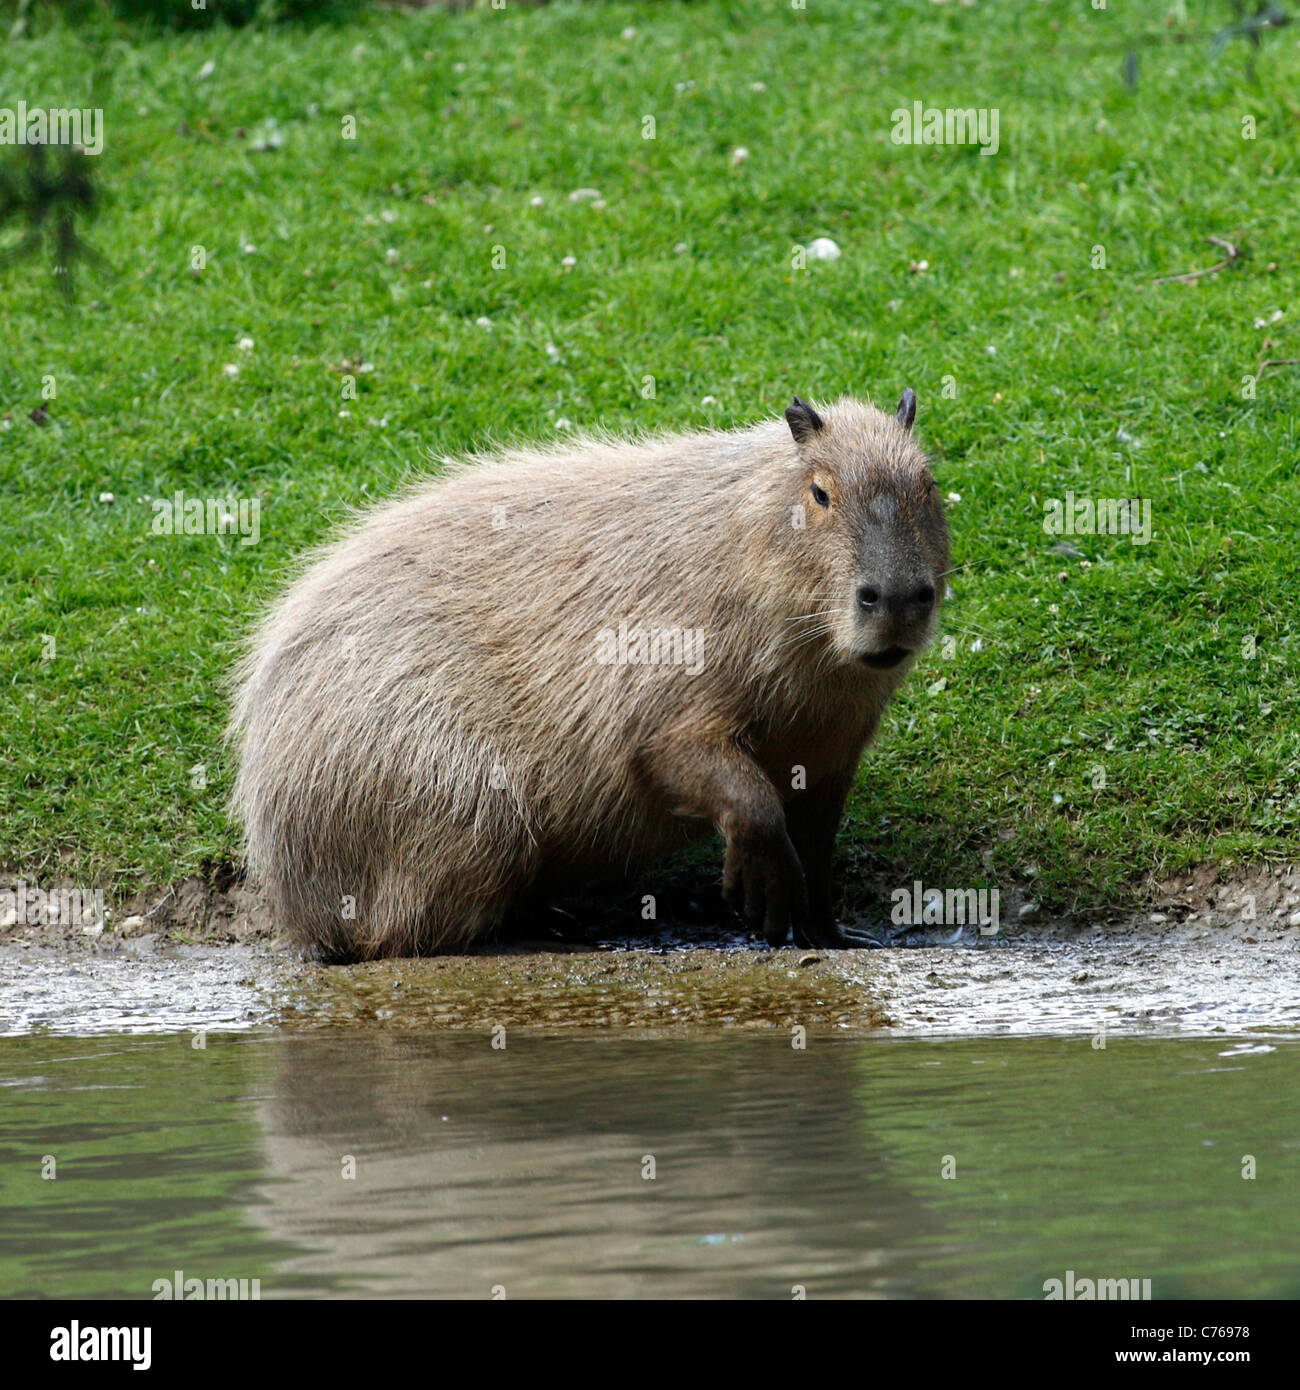 https://c8.alamy.com/comp/C76978/capybara-water-hog-hydrochoerus-hydrochaeris-C76978.jpg